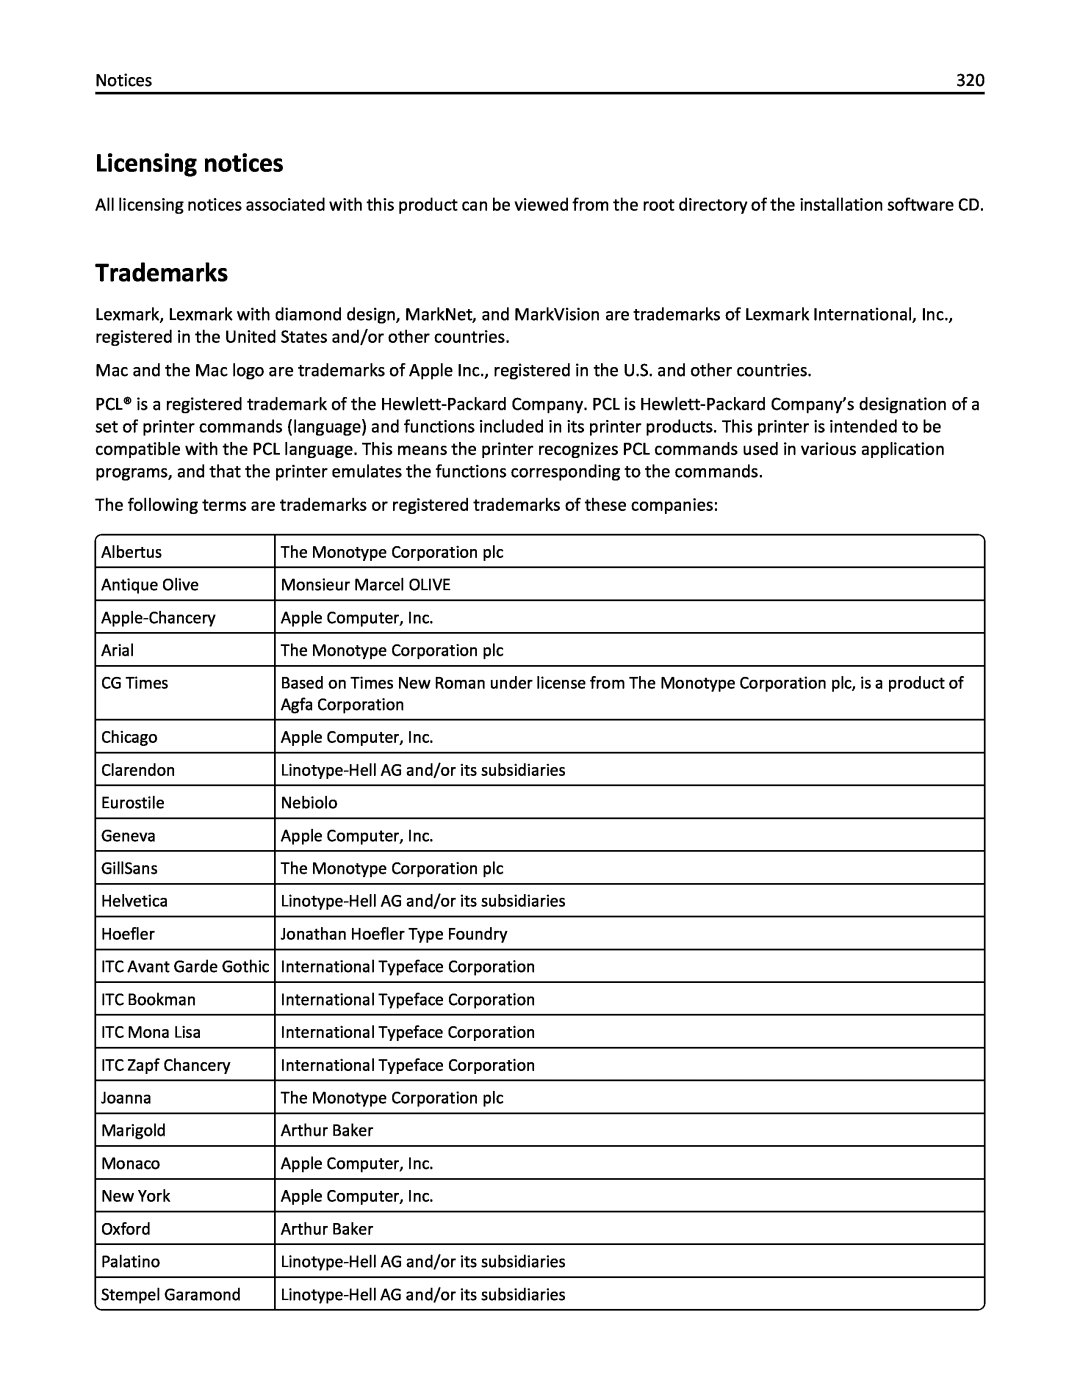 Lexmark 436 manual Licensing notices, Trademarks 